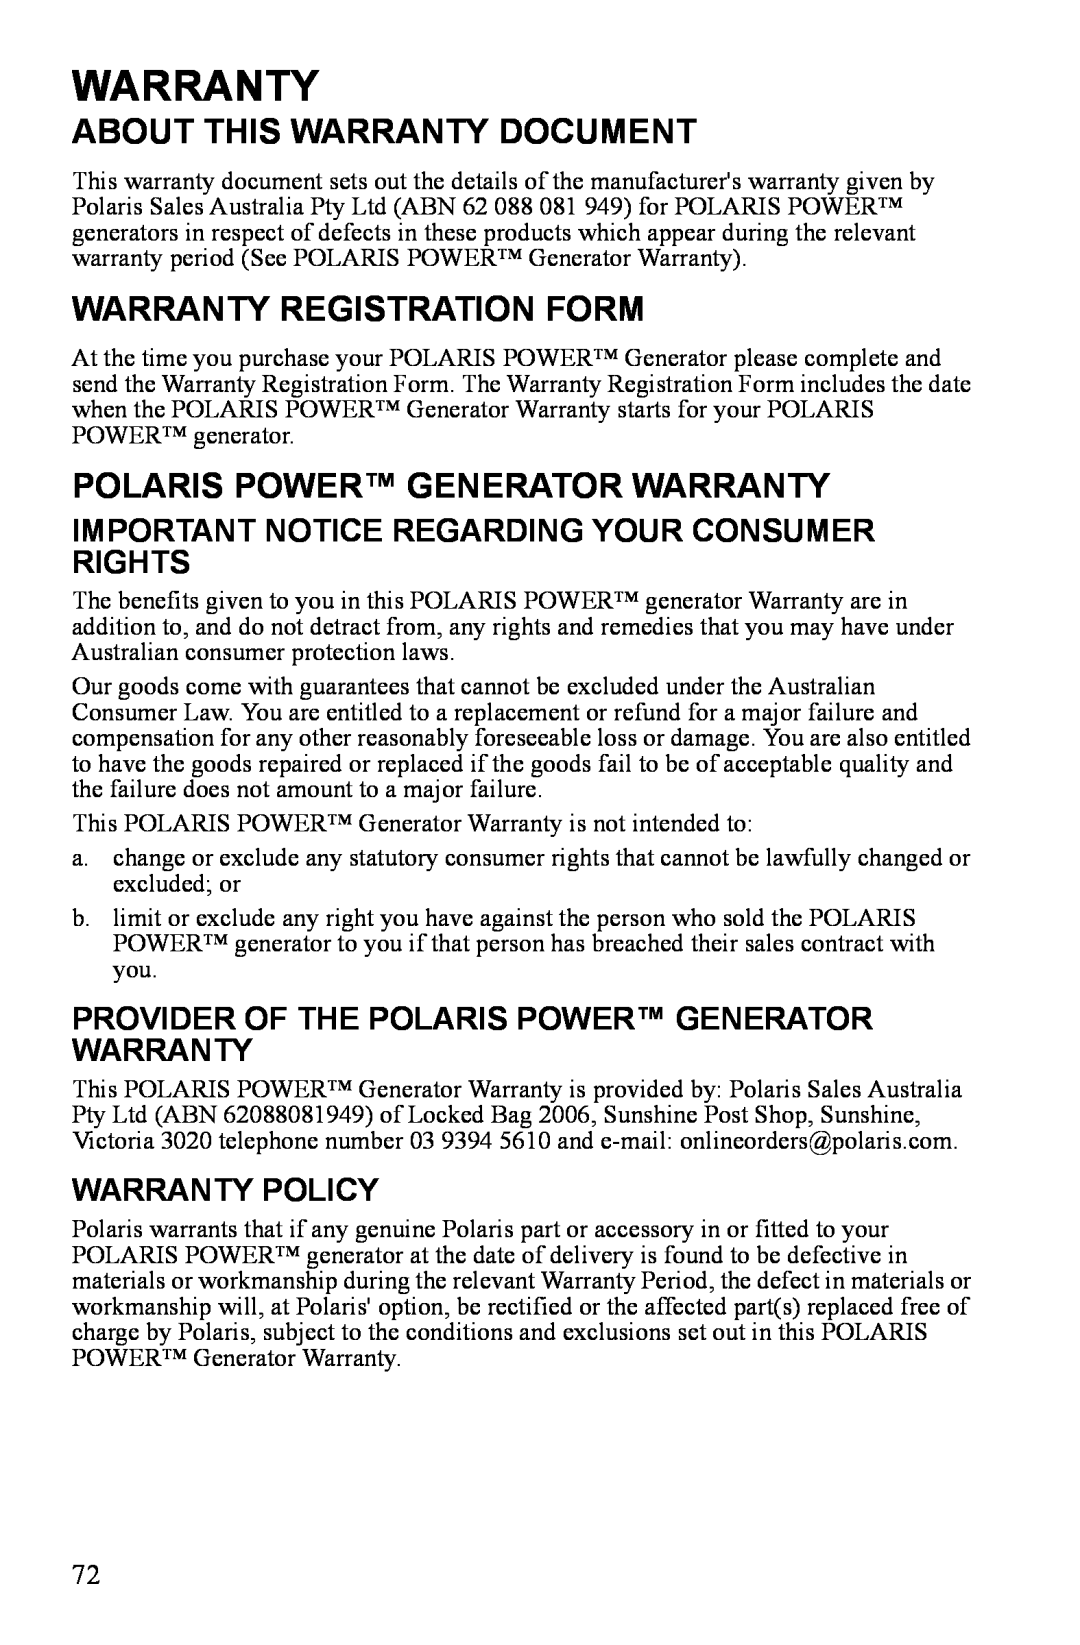 Polaris P3000iE manual About This Warranty Document, Warranty Registration Form, Polaris Power Generator Warranty 